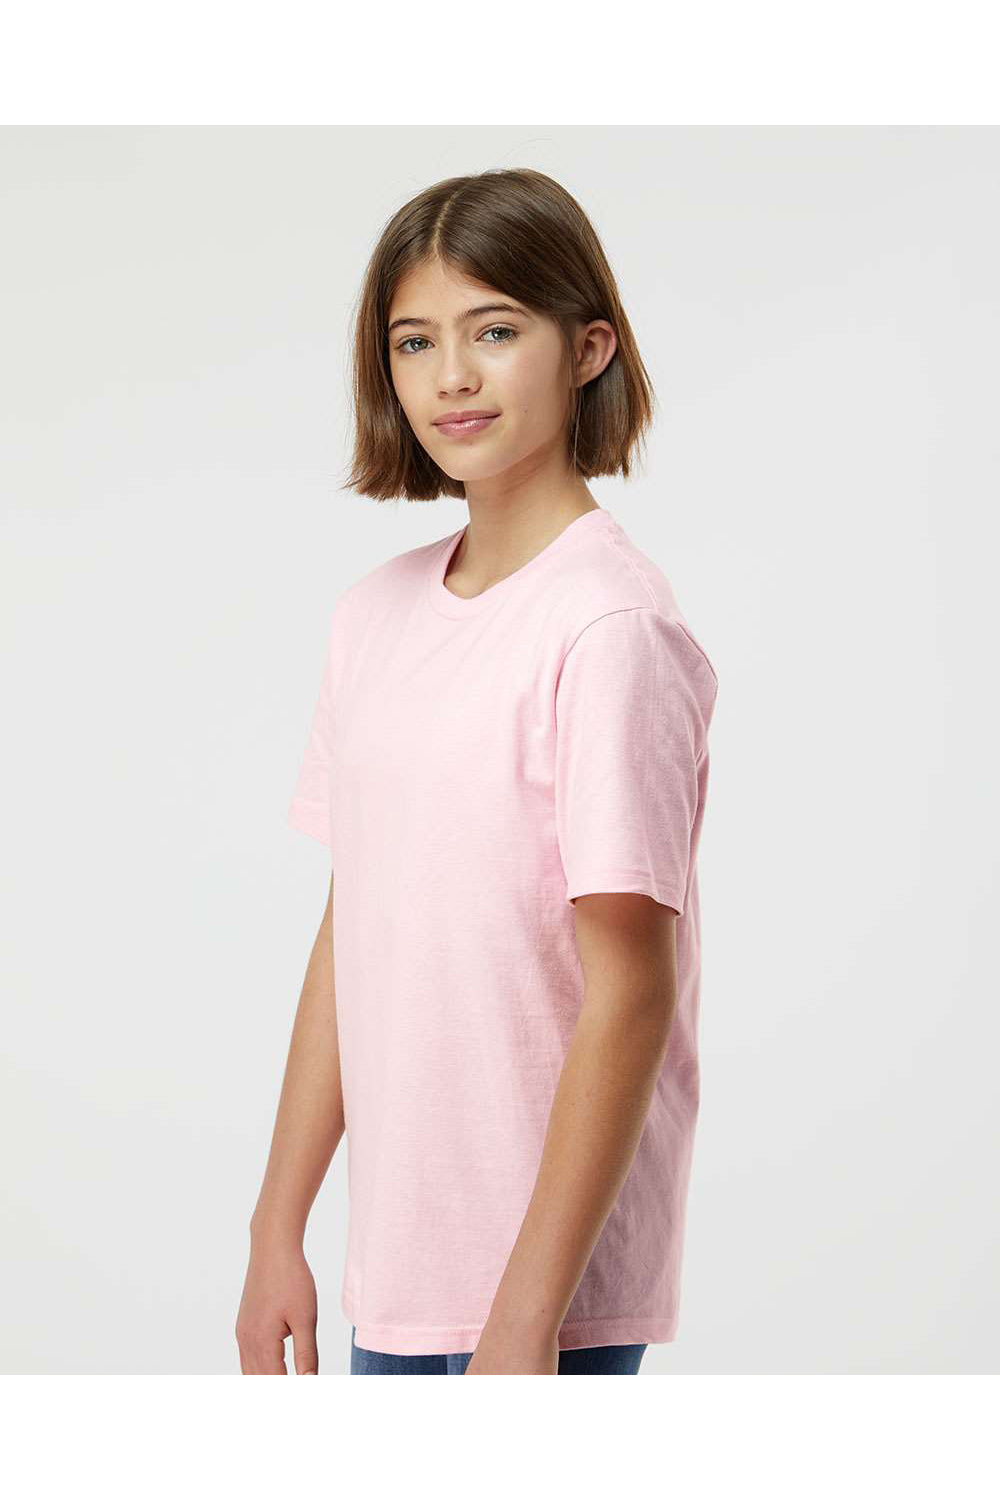 Tultex 295 Youth Jersey Short Sleeve Crewneck T-Shirt Light Pink Model Side